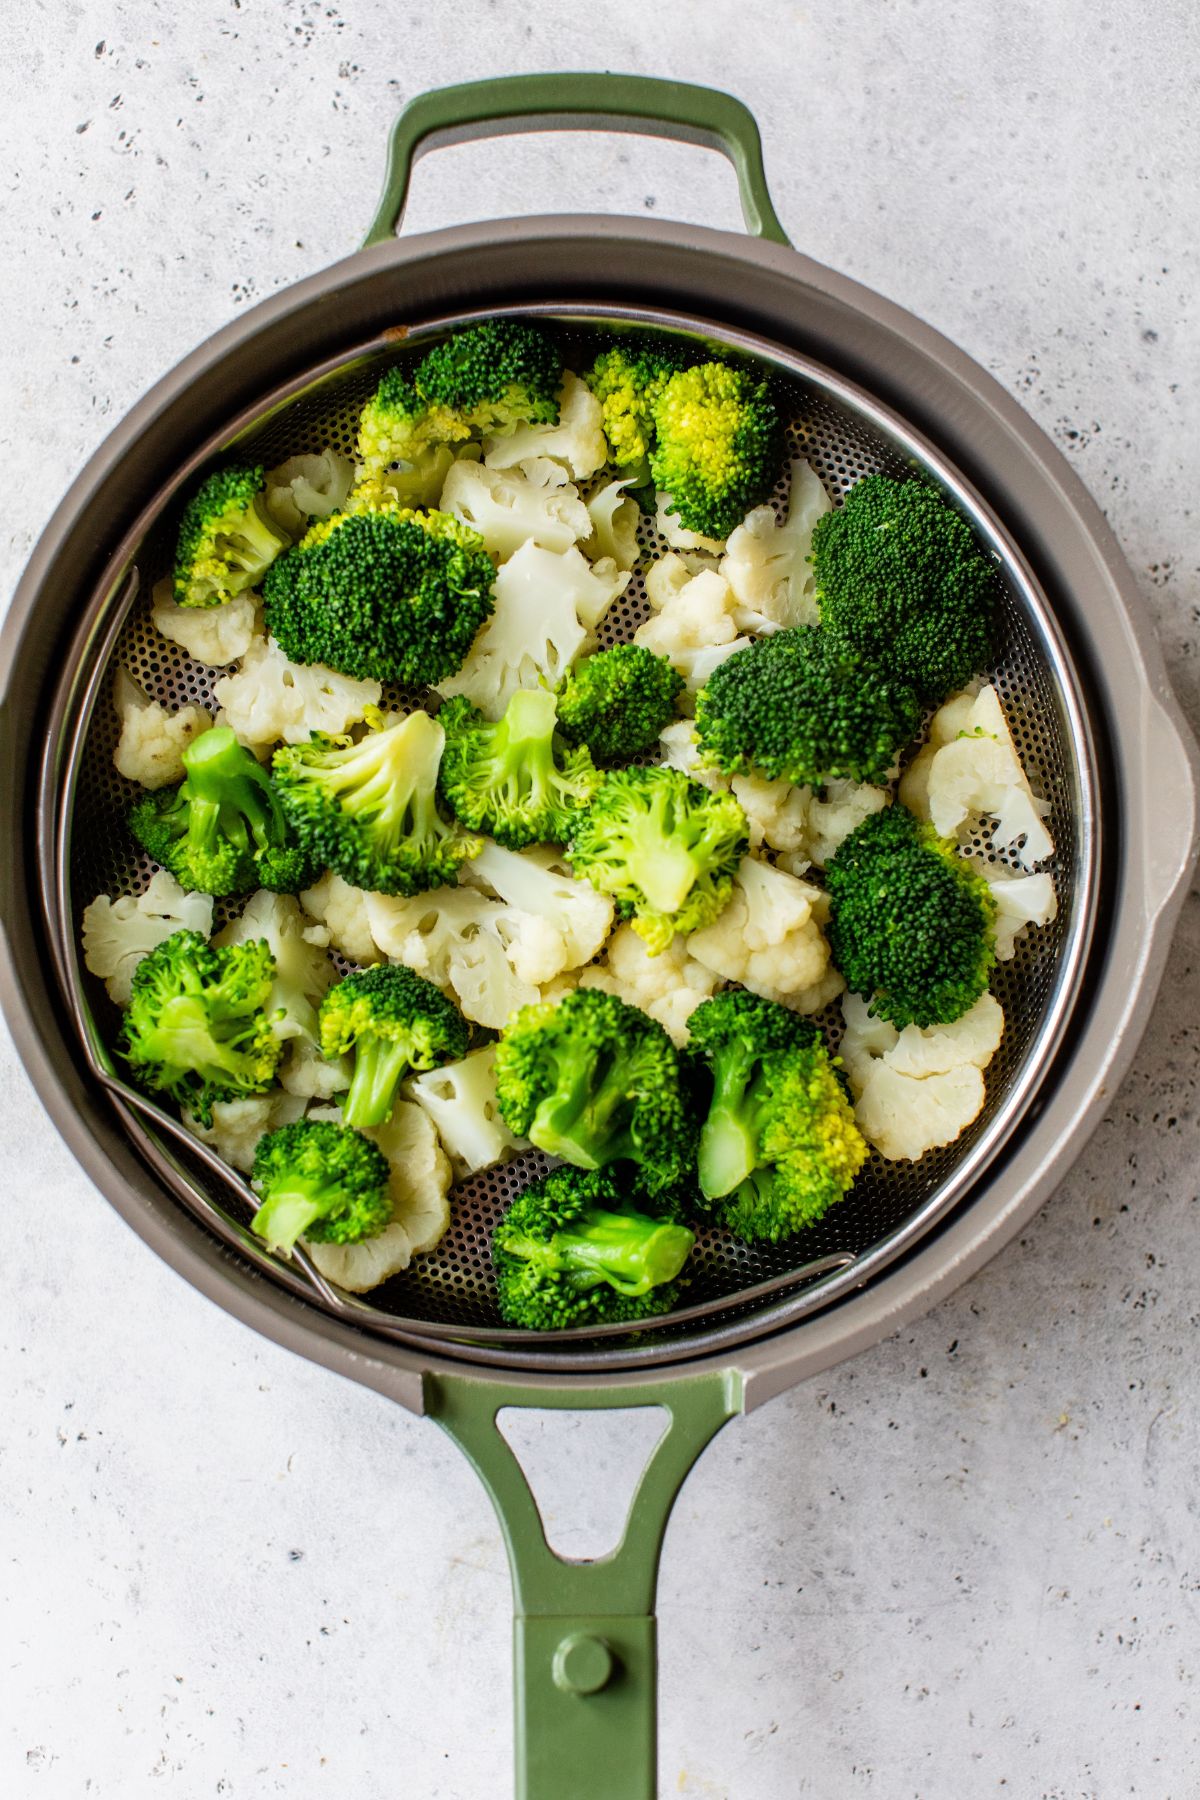 Broccoli and cauliflower in a steamer basket.